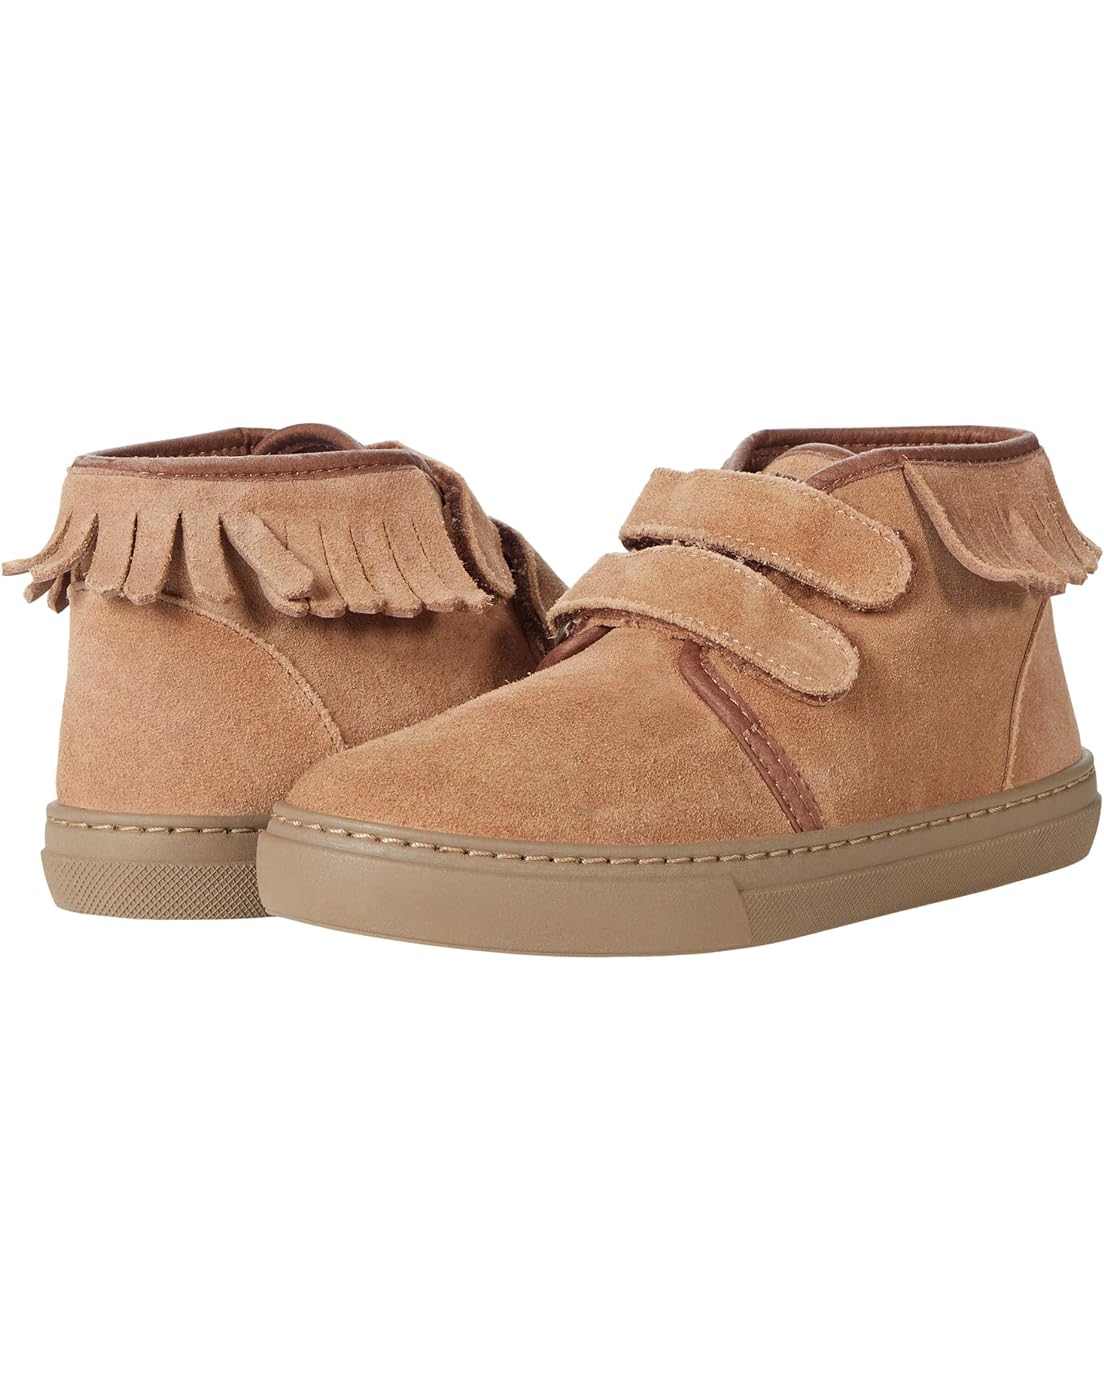 Cienta Kids Shoes 94887 (Toddleru002FLittle Kidu002FBig Kid)